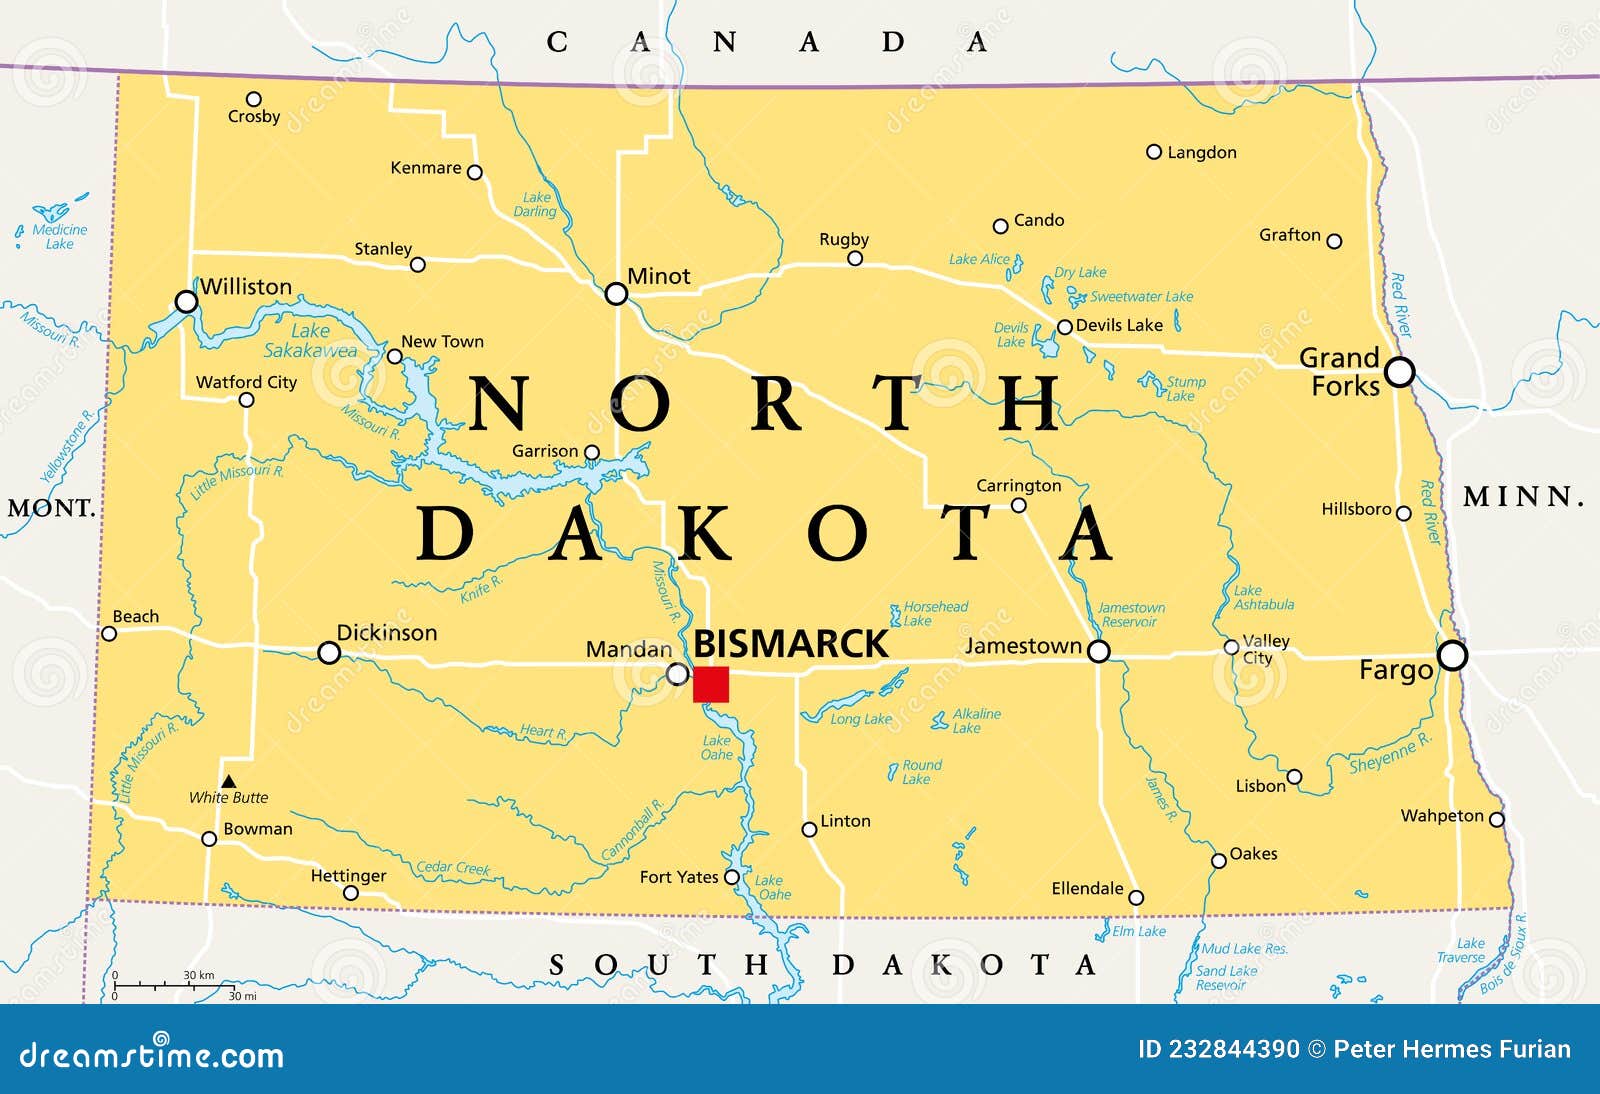 north dakota, nd, political map, us state, peace garden state